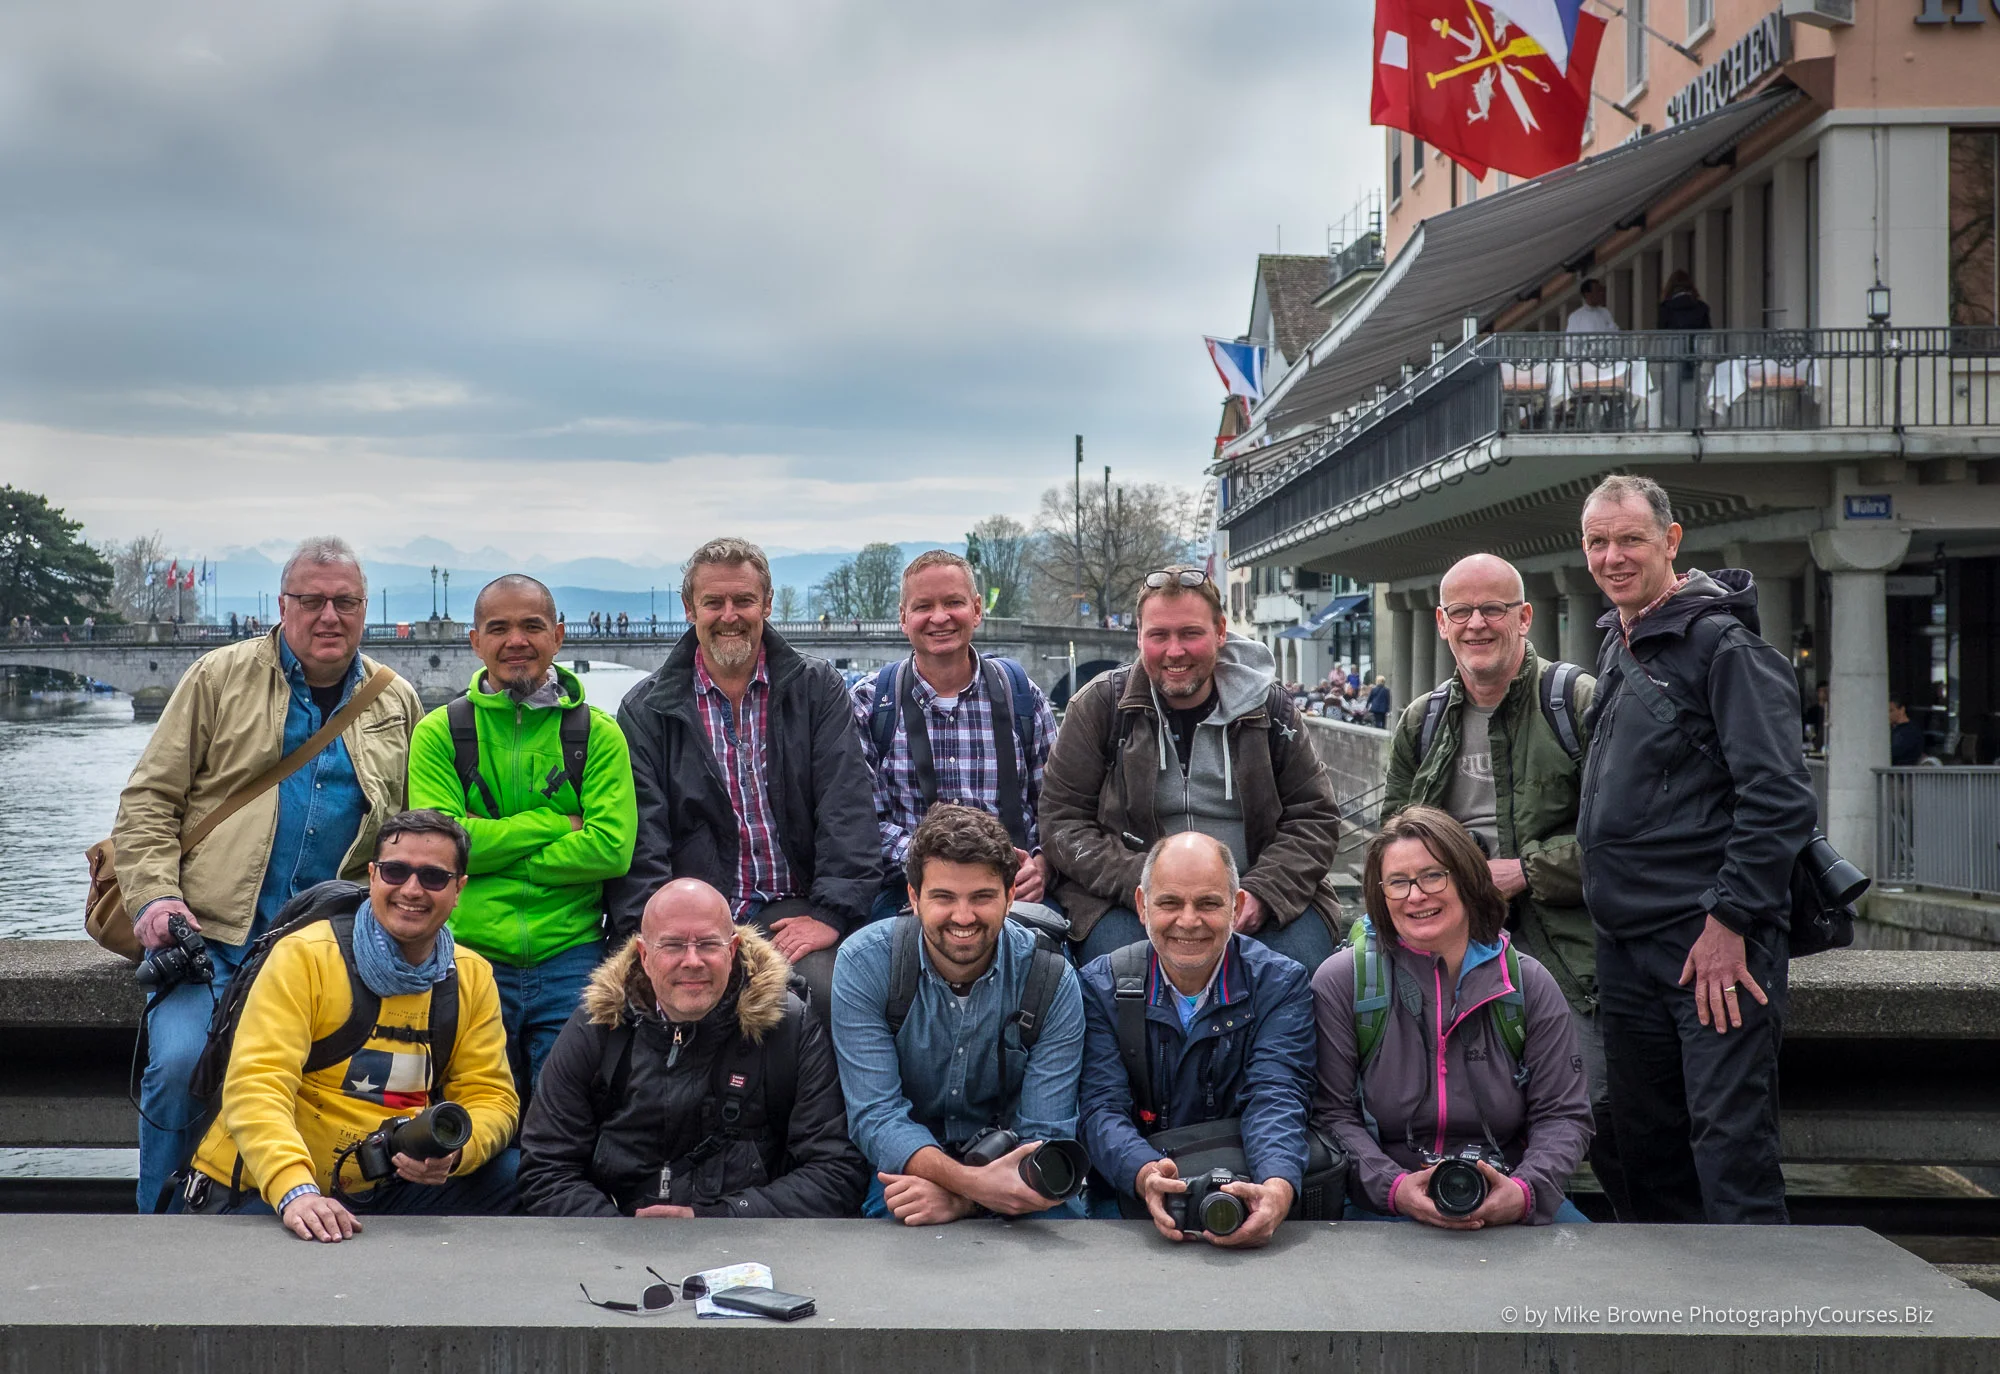 Group of photographers on the Rathausbrücke bridge in Zurich